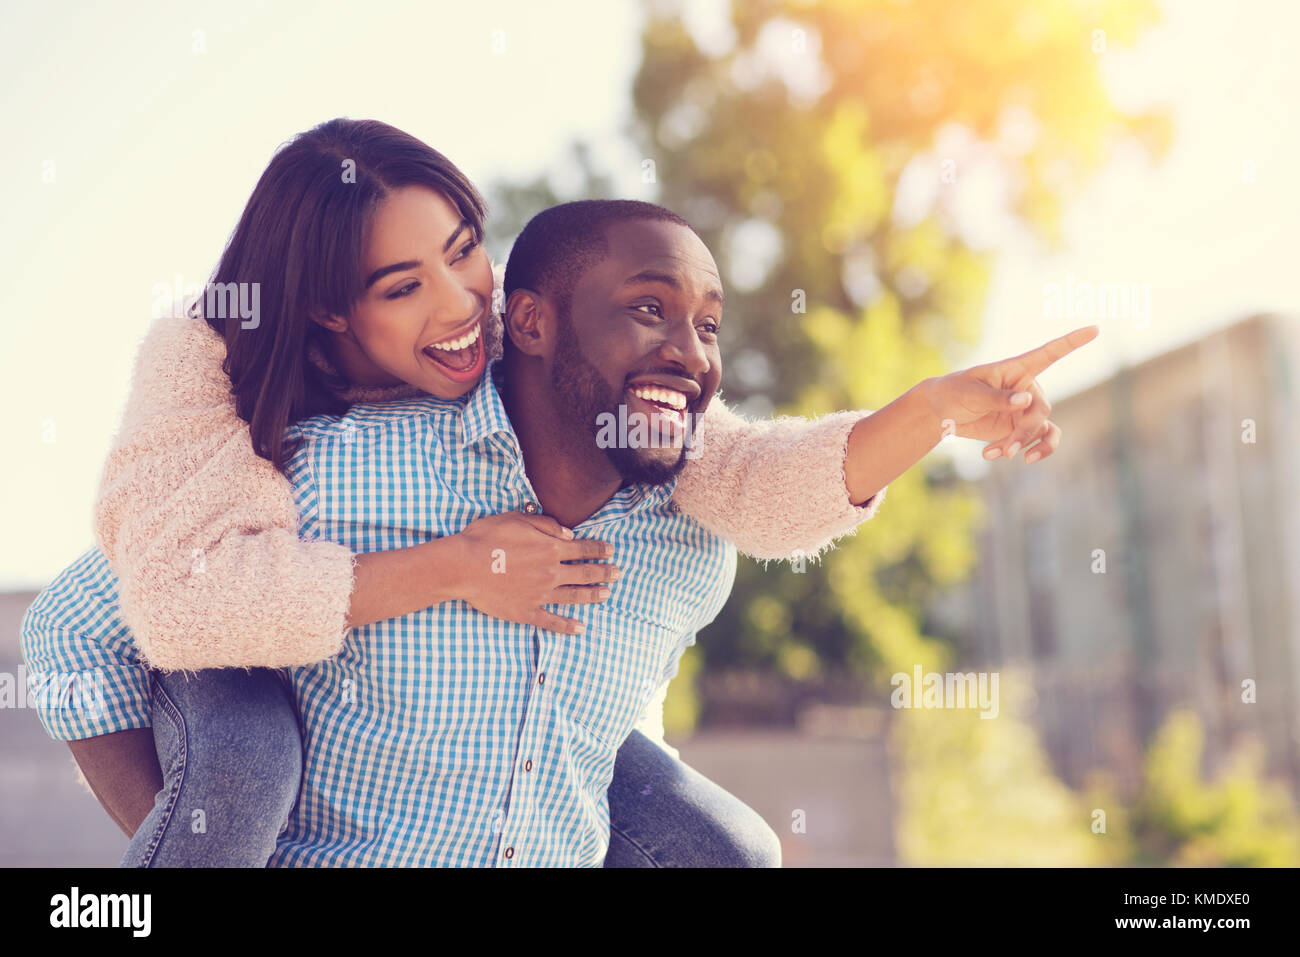 Joyful positive couple having fun together Stock Photo